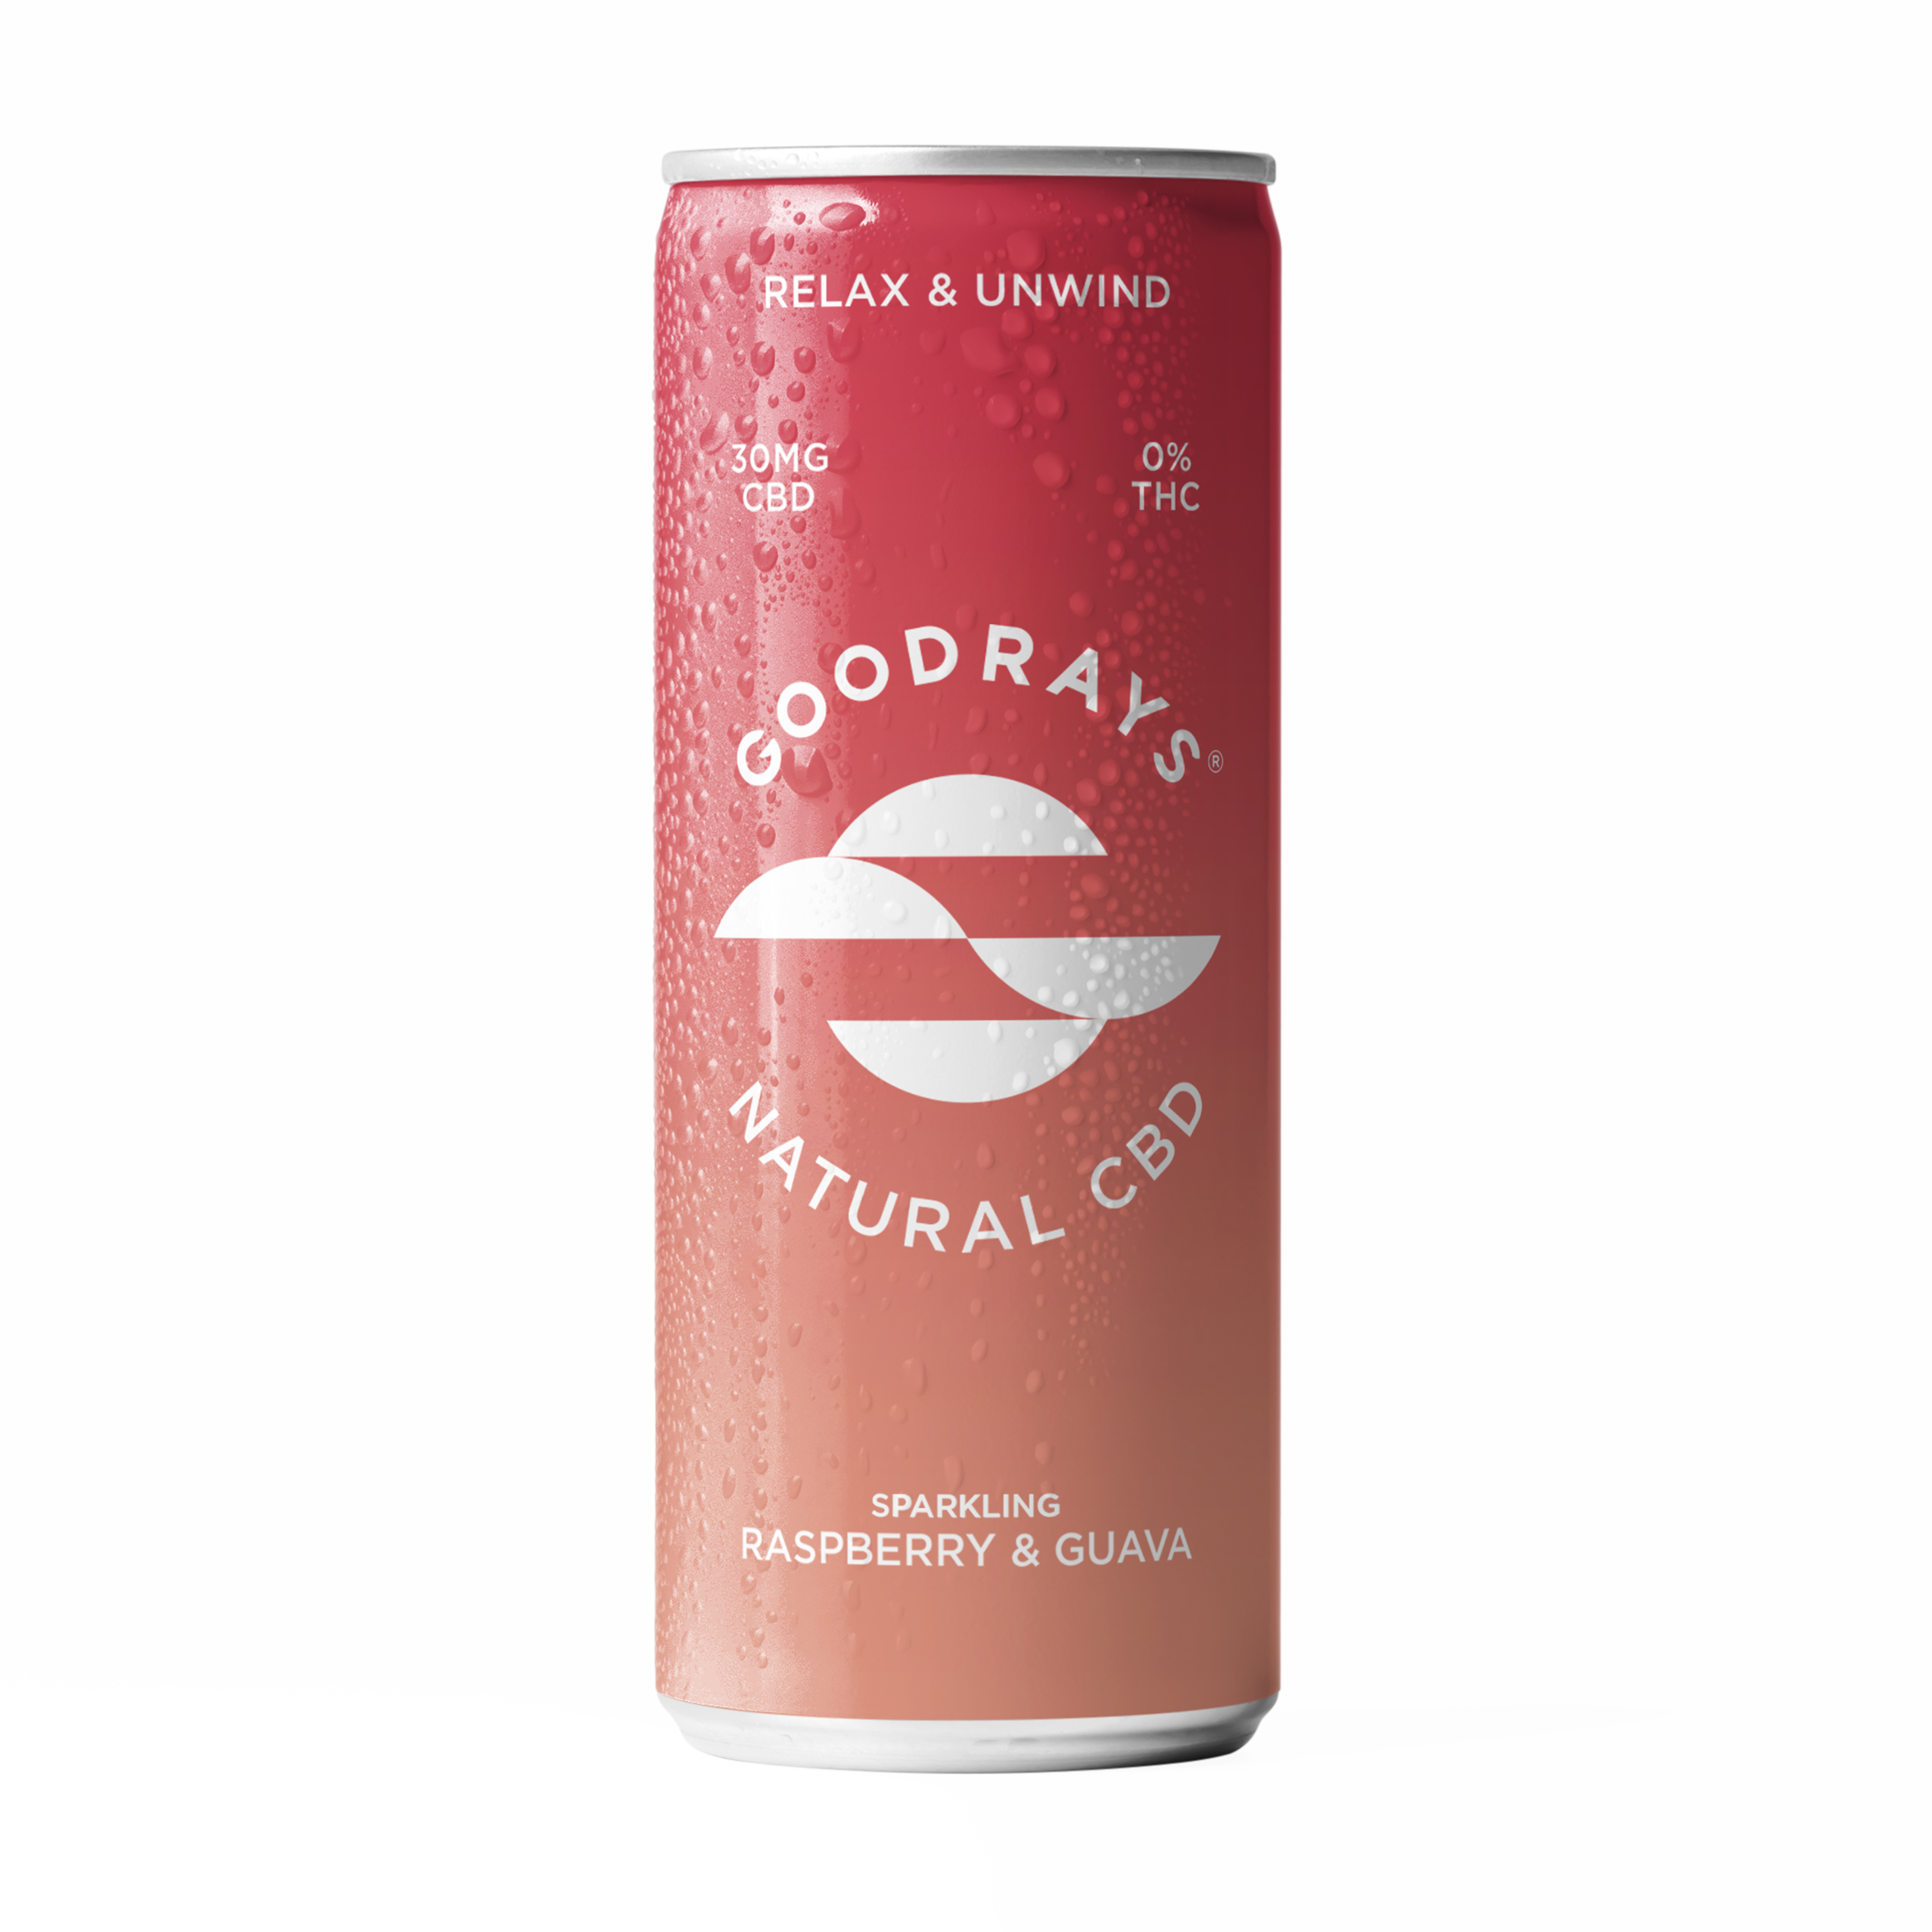 Goodrays 30mg CBD Raspberry & Guava Seltzer